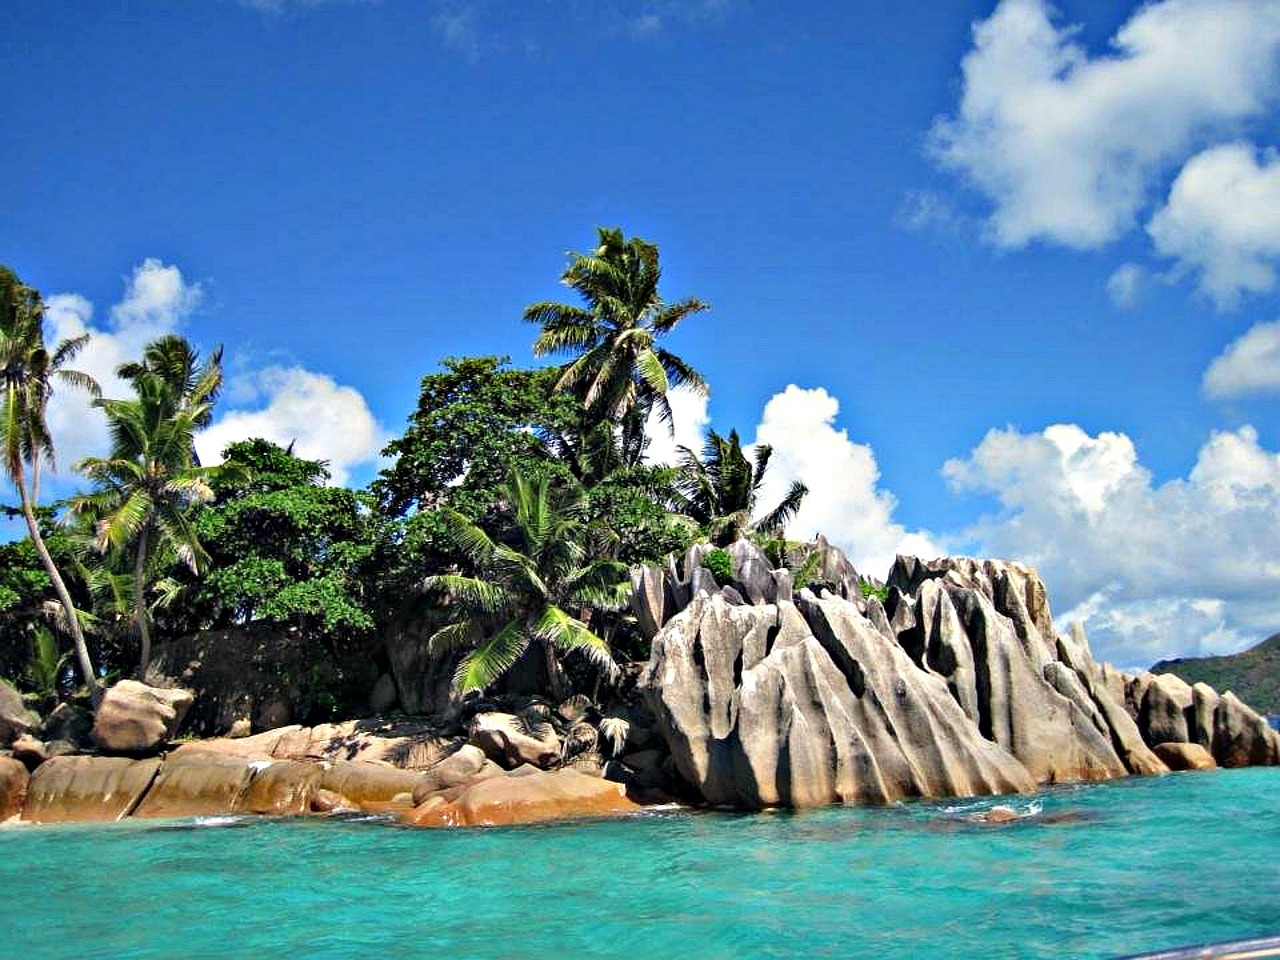 seychelles islands travel restrictions